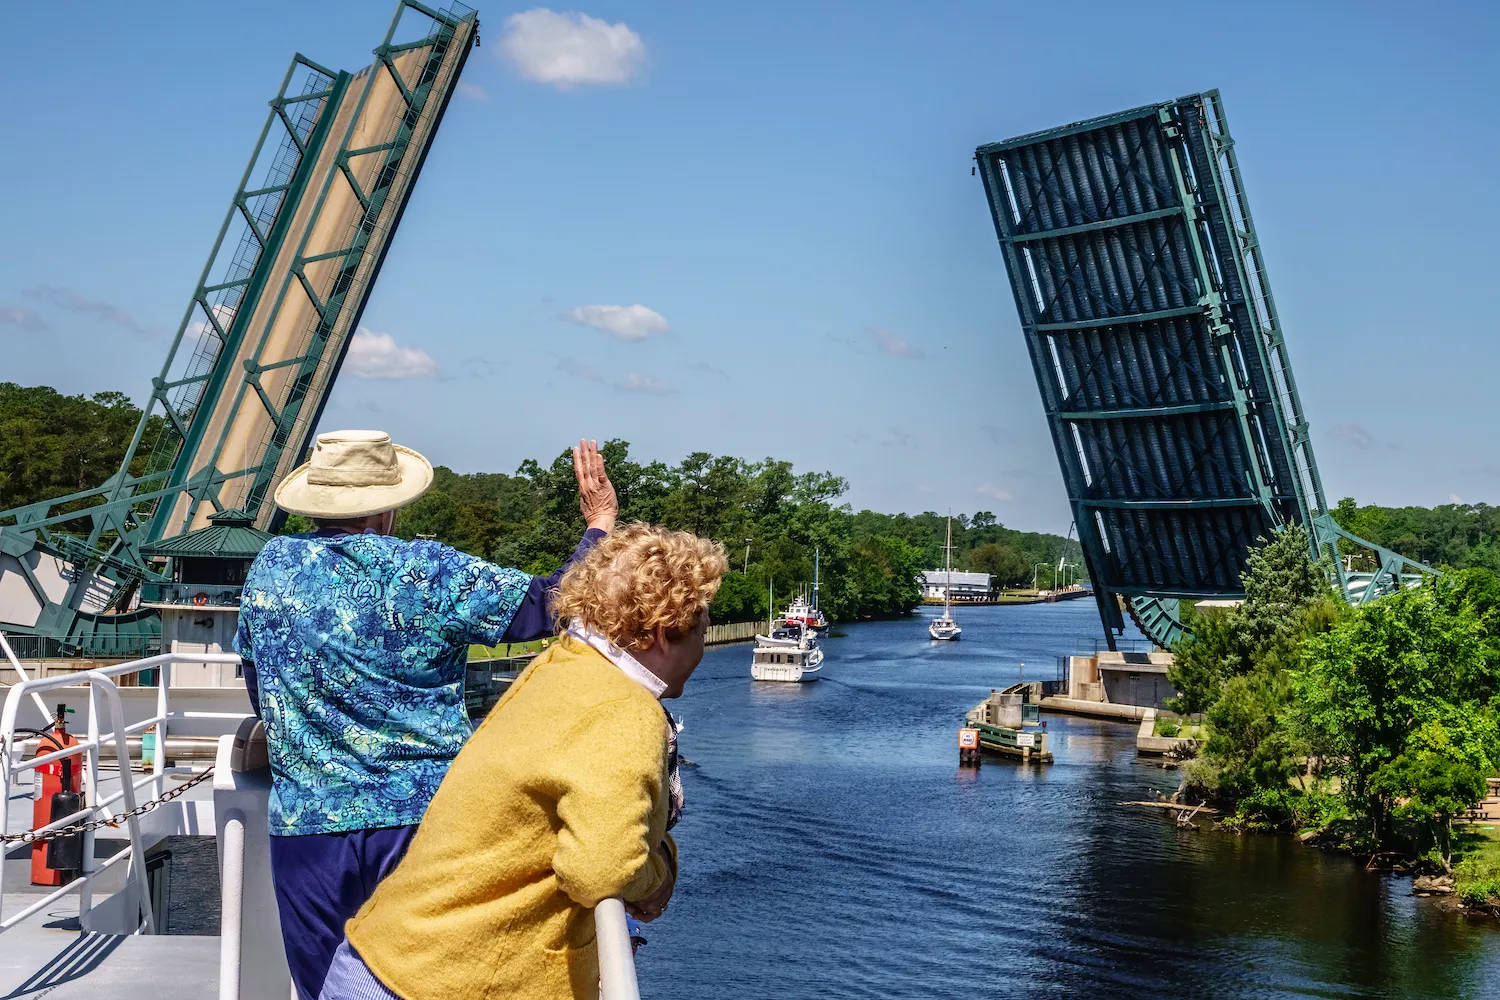 The Great Bridge In Chesapeake Background